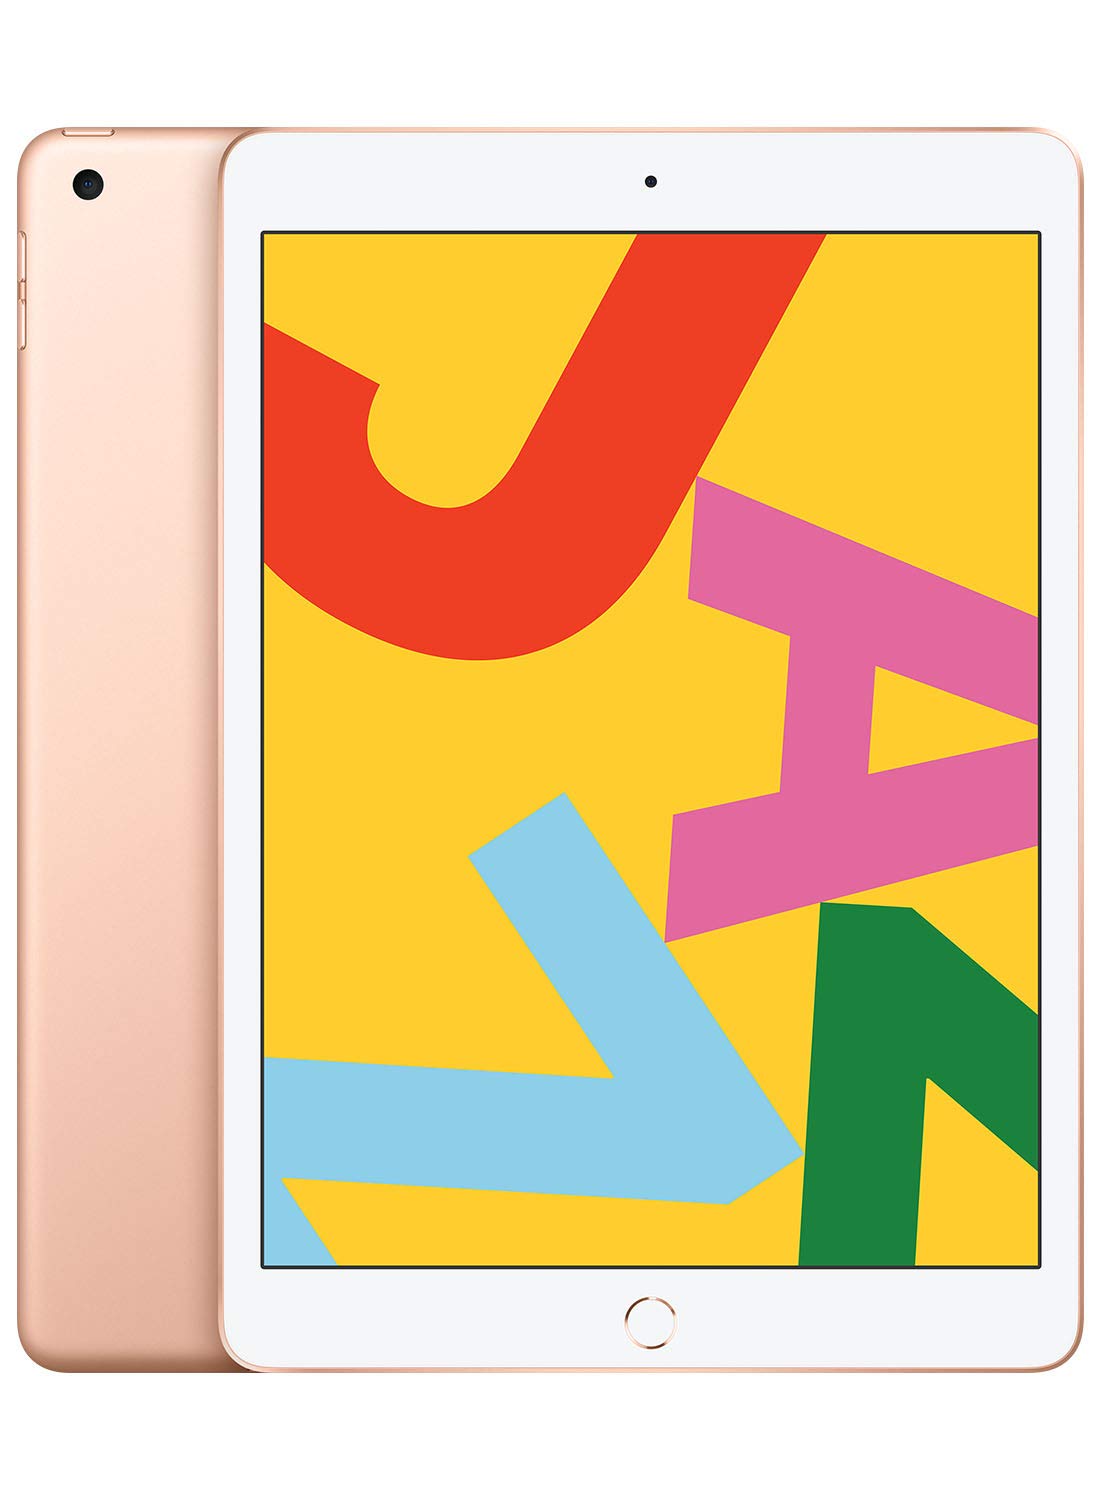 Apple iPad (10.2-inch, Wi-Fi, 32GB) - Gold (Previous Model)﻿